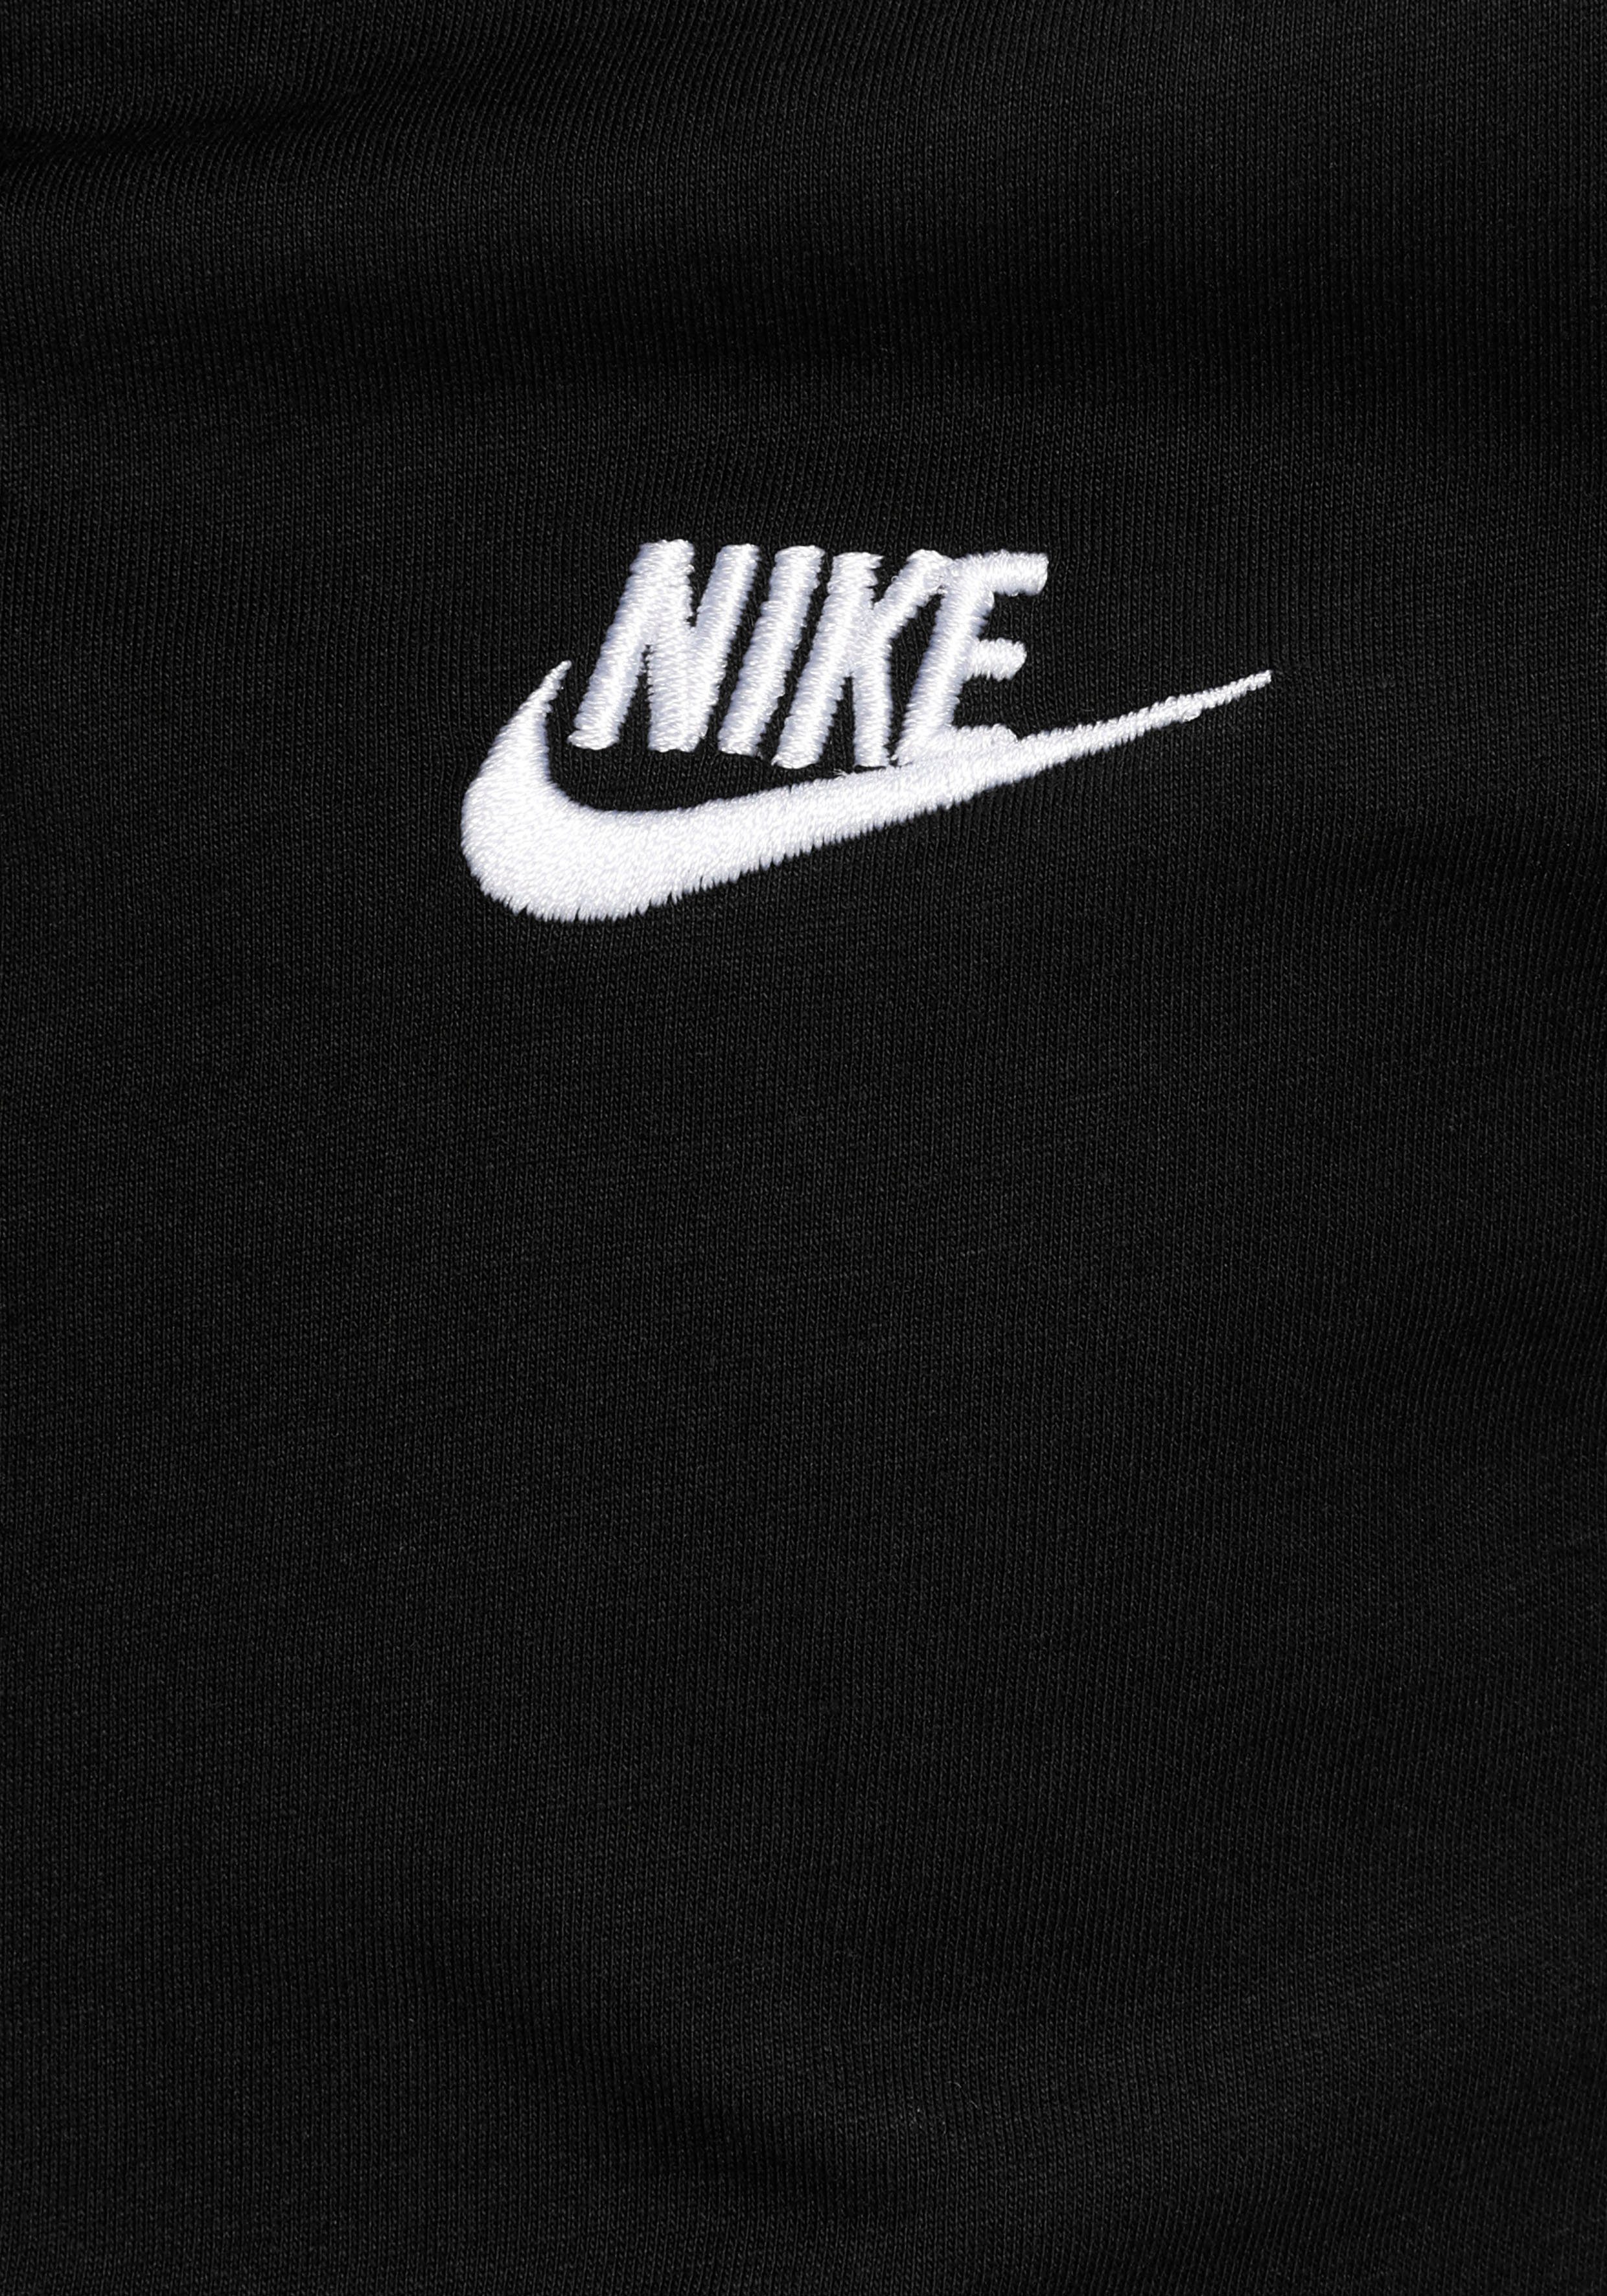 Langarmshirt LONG-SLEEVE (BOYS) Sportswear schwarz T-SHIRT BIG KIDS' Nike